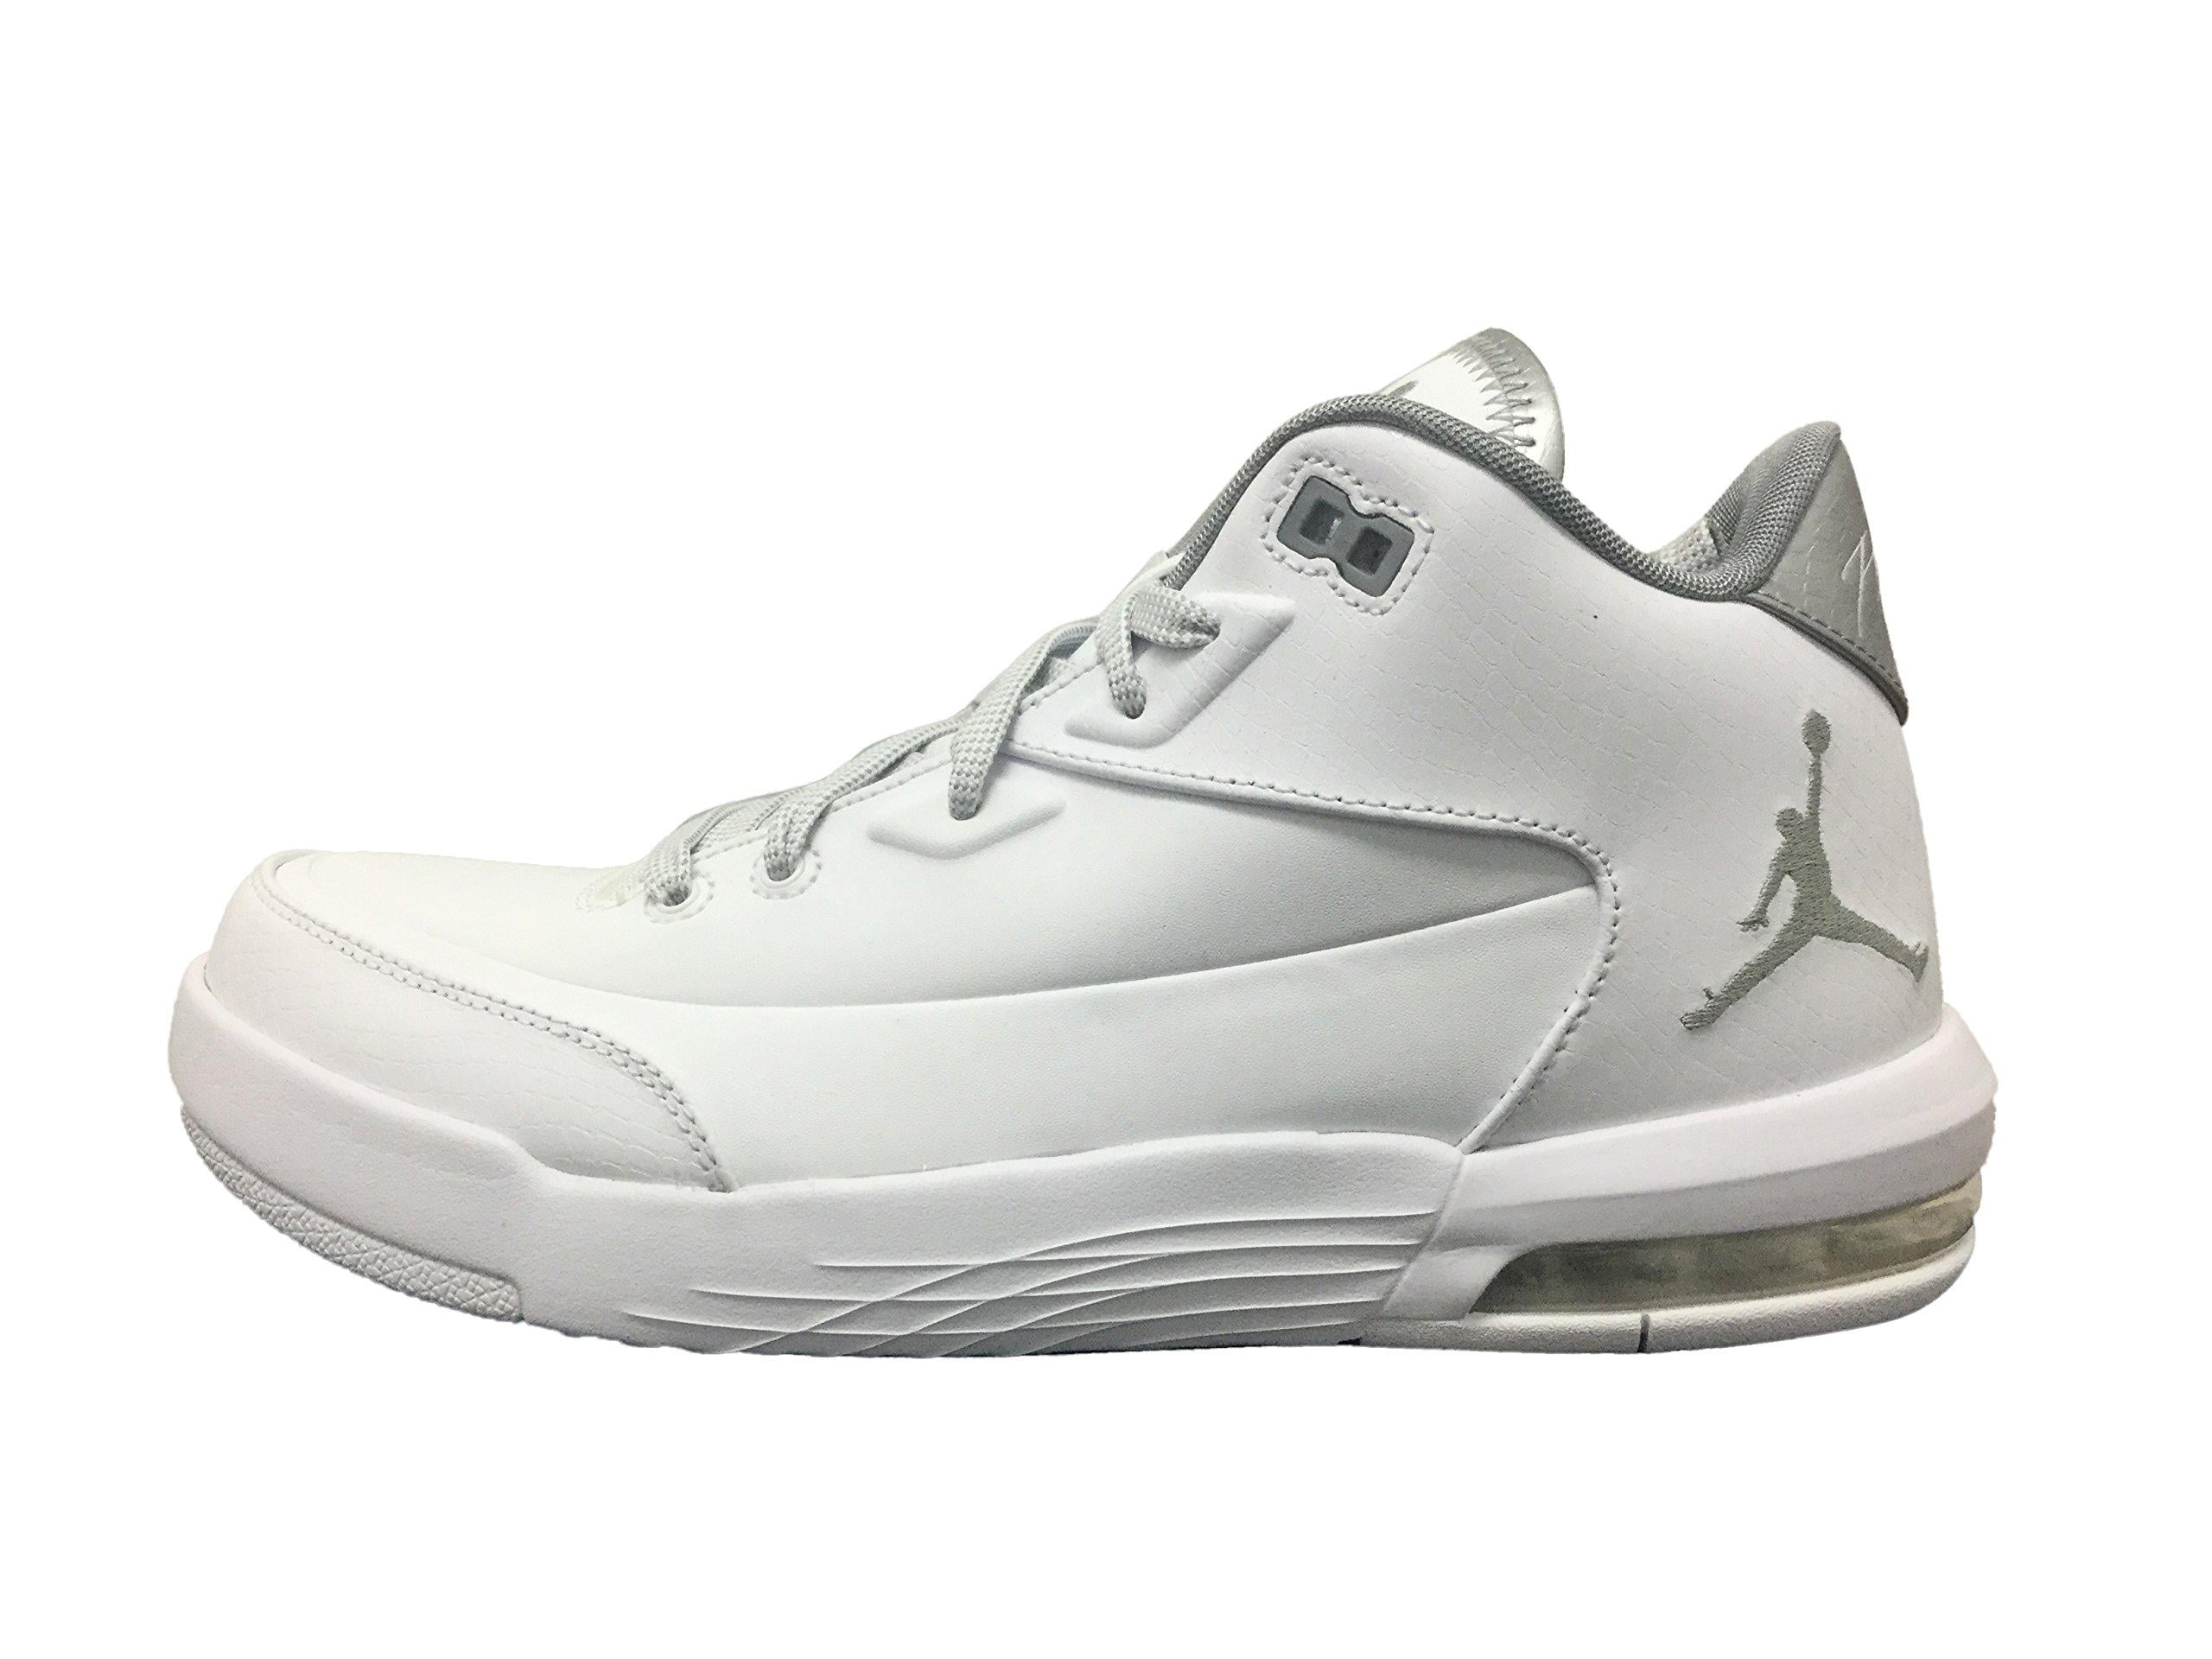 Nike Men's Jordan Flight Origin 3 White/Metallic Silver/White Basketball Shoes Walmart.com